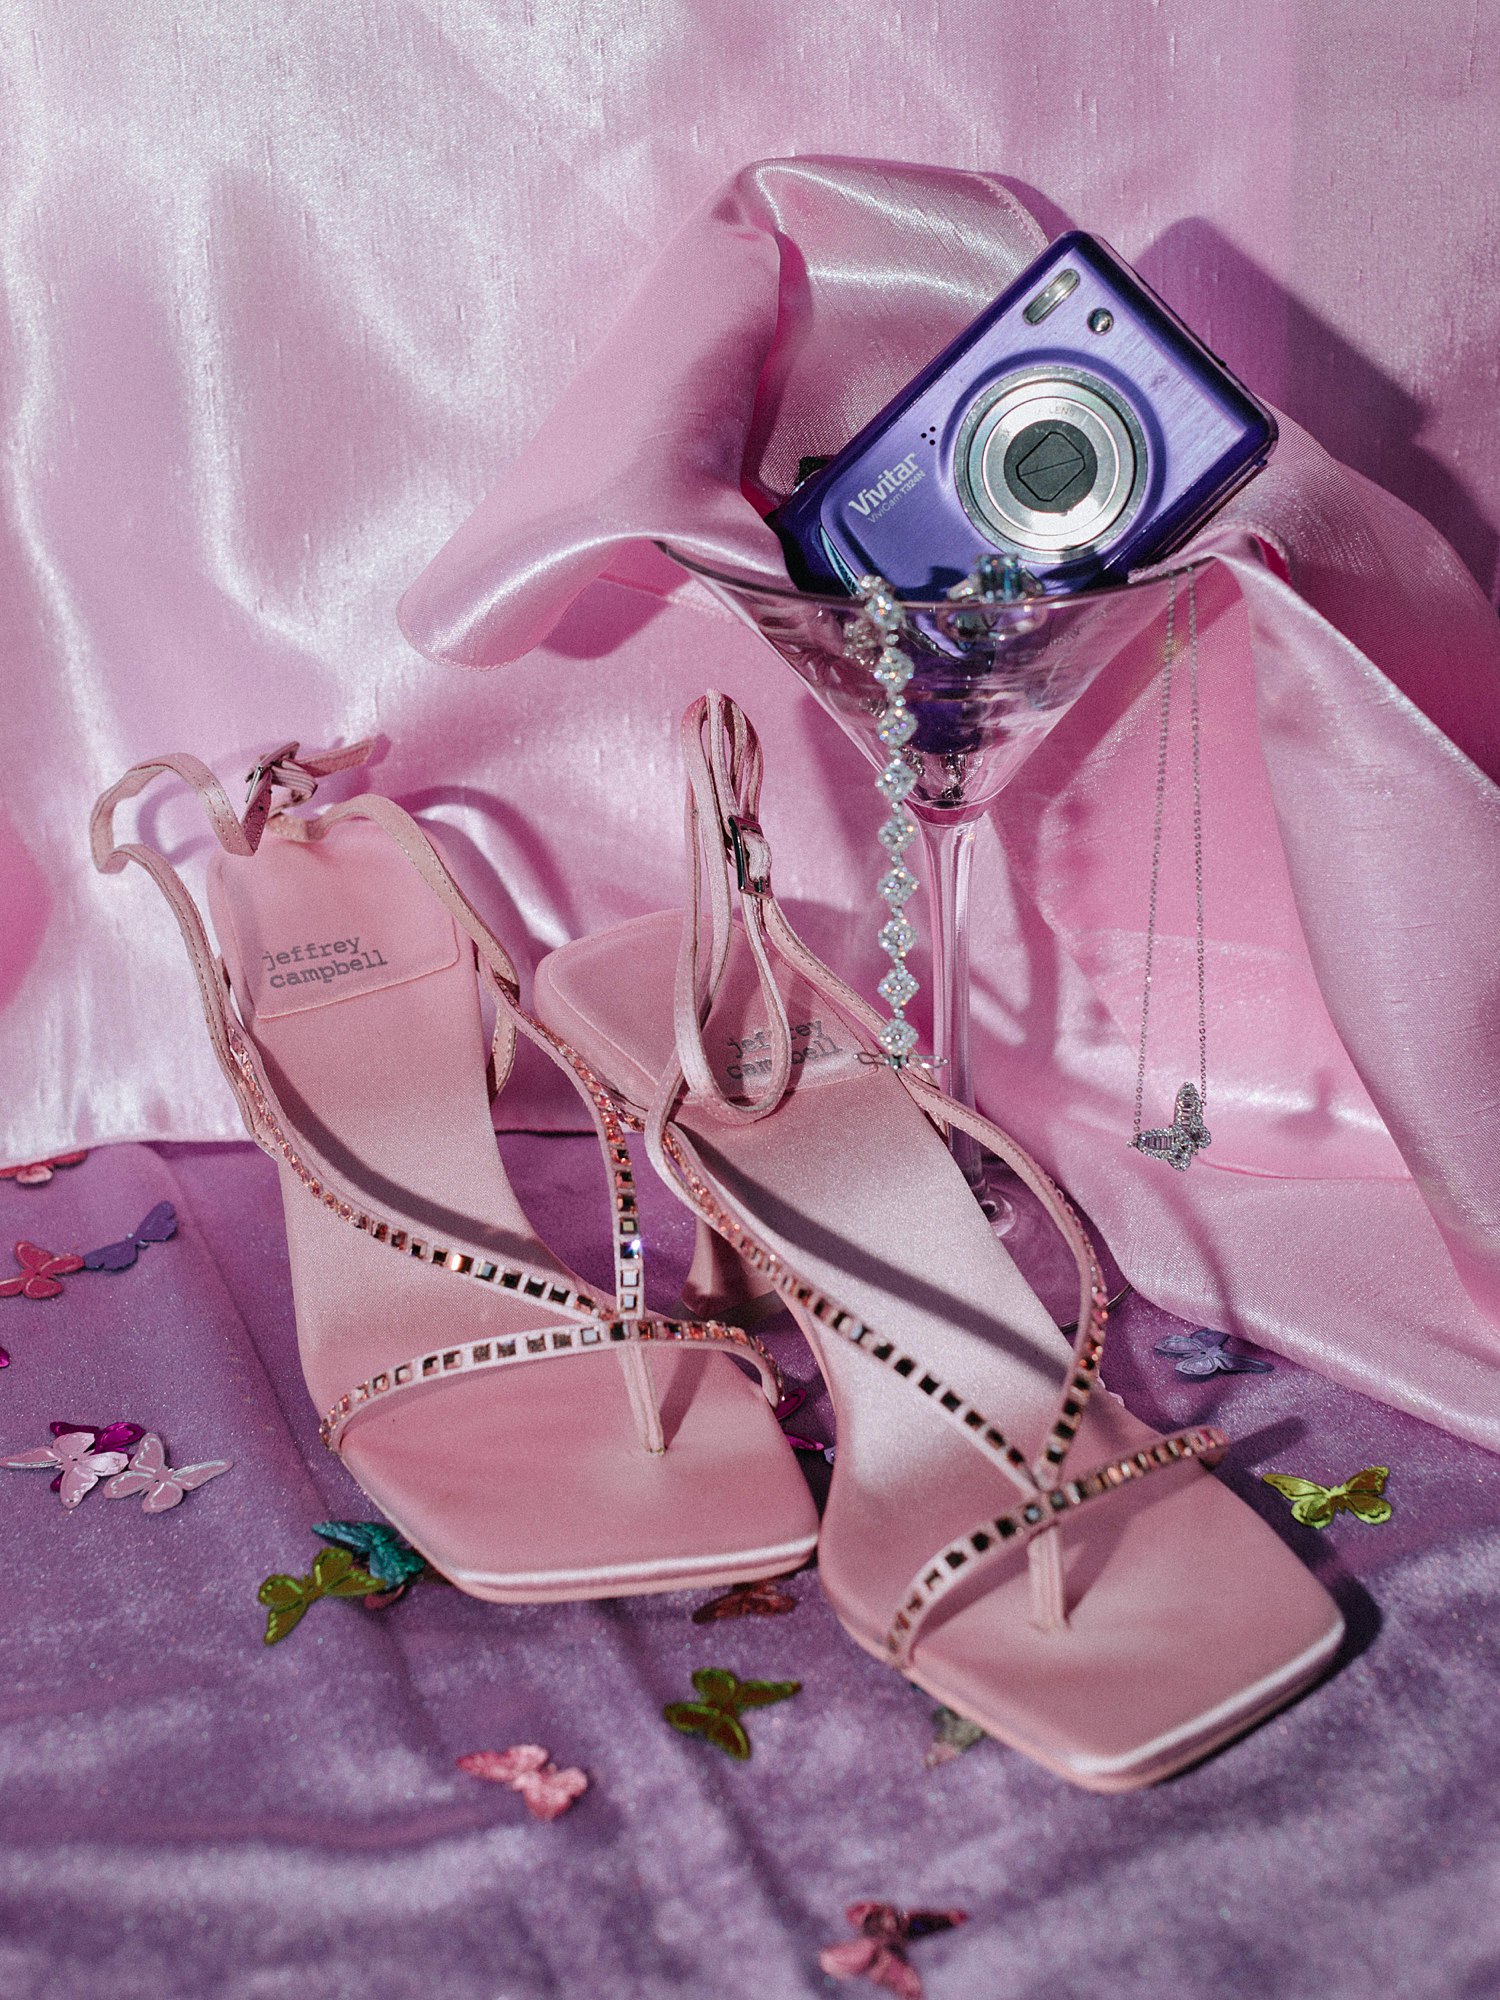 purple camera in martini glass next to pink heels and diamond bracelet